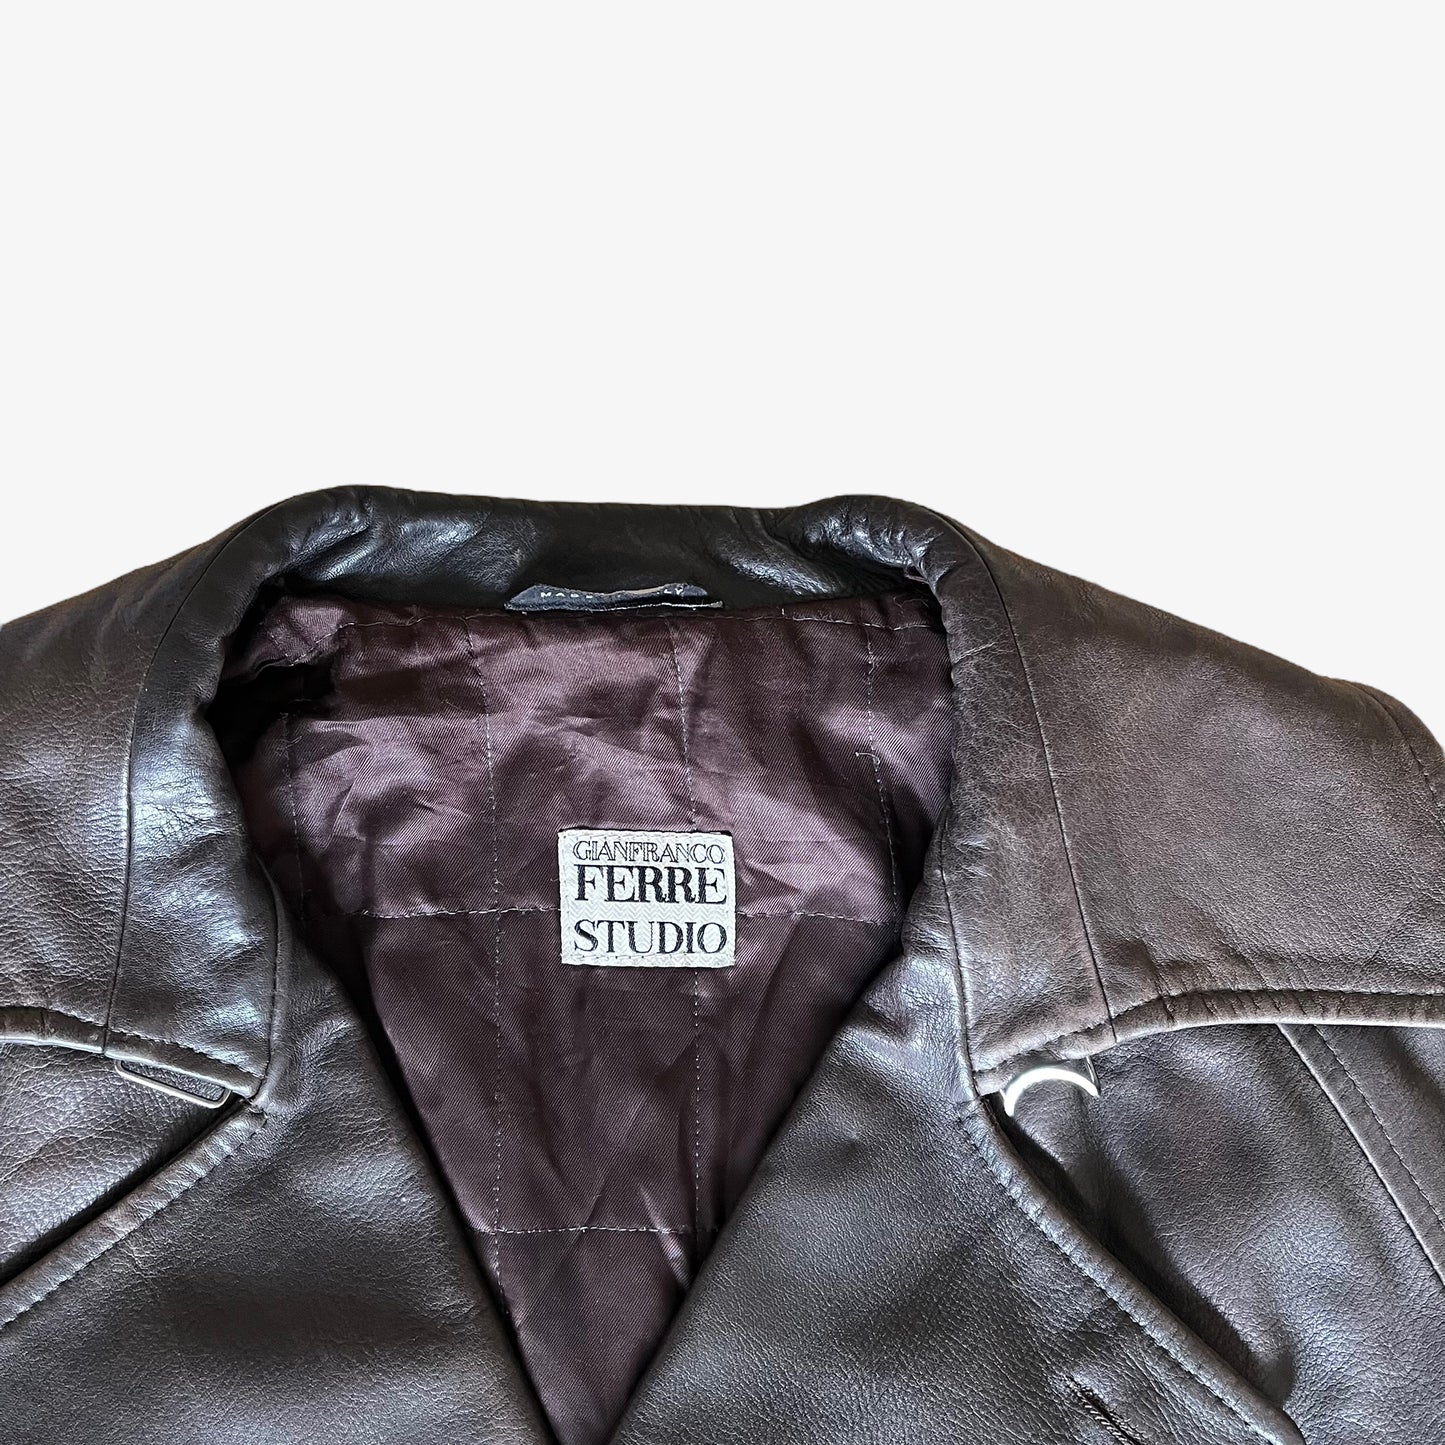 Vintage 90s Gianfranco Ferre Studio Leather Double Breasted Coat With Original Belt Label - Casspios Dream